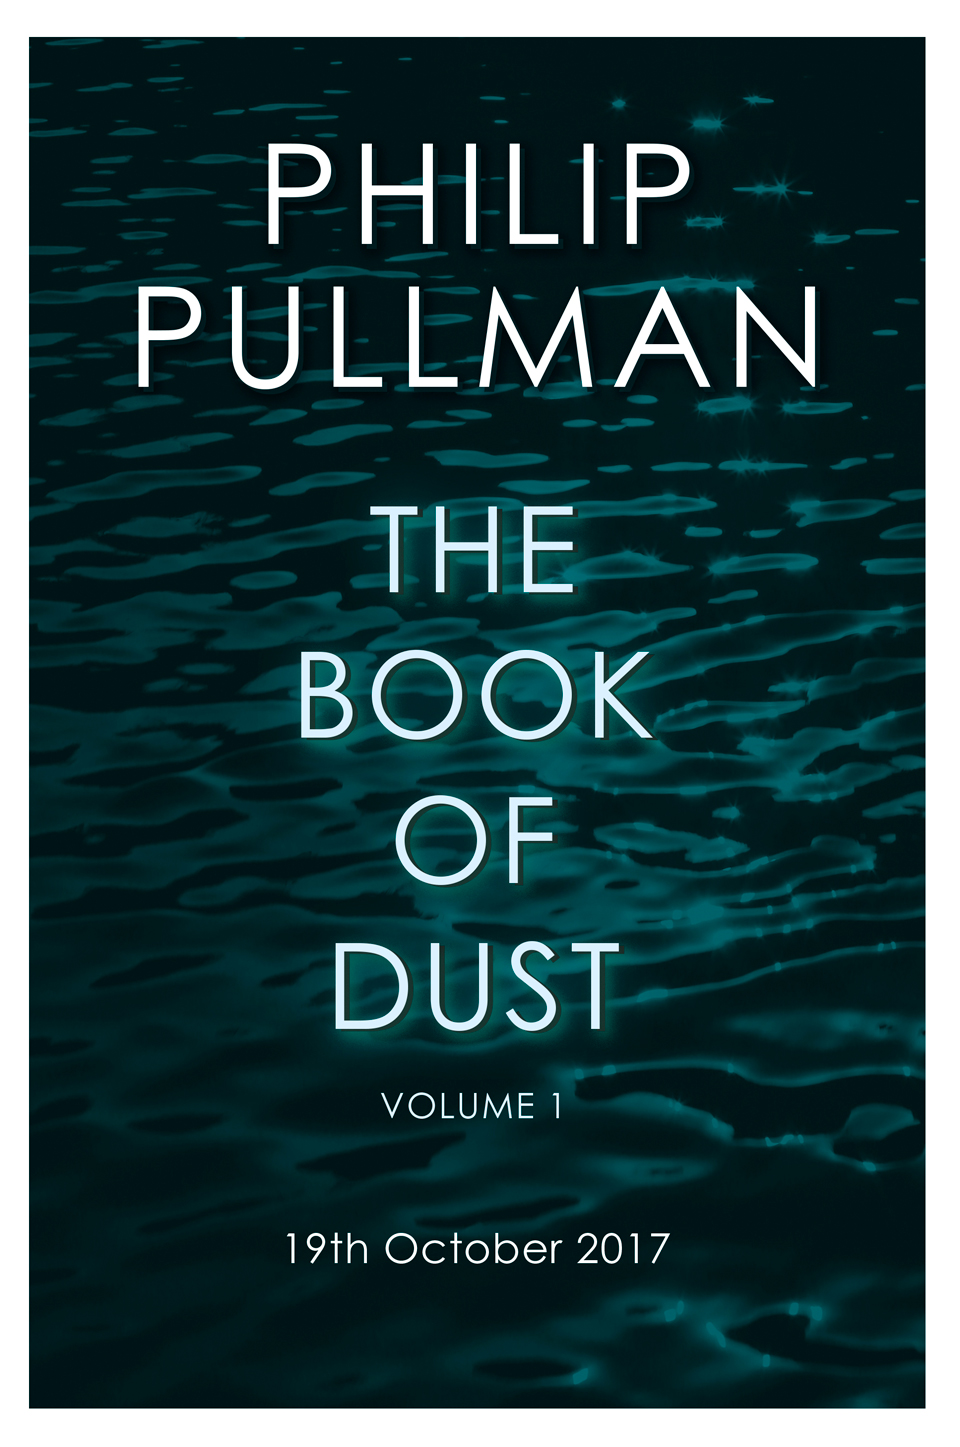 Philip pullman reveals long-awaited follow-up to his dark materials